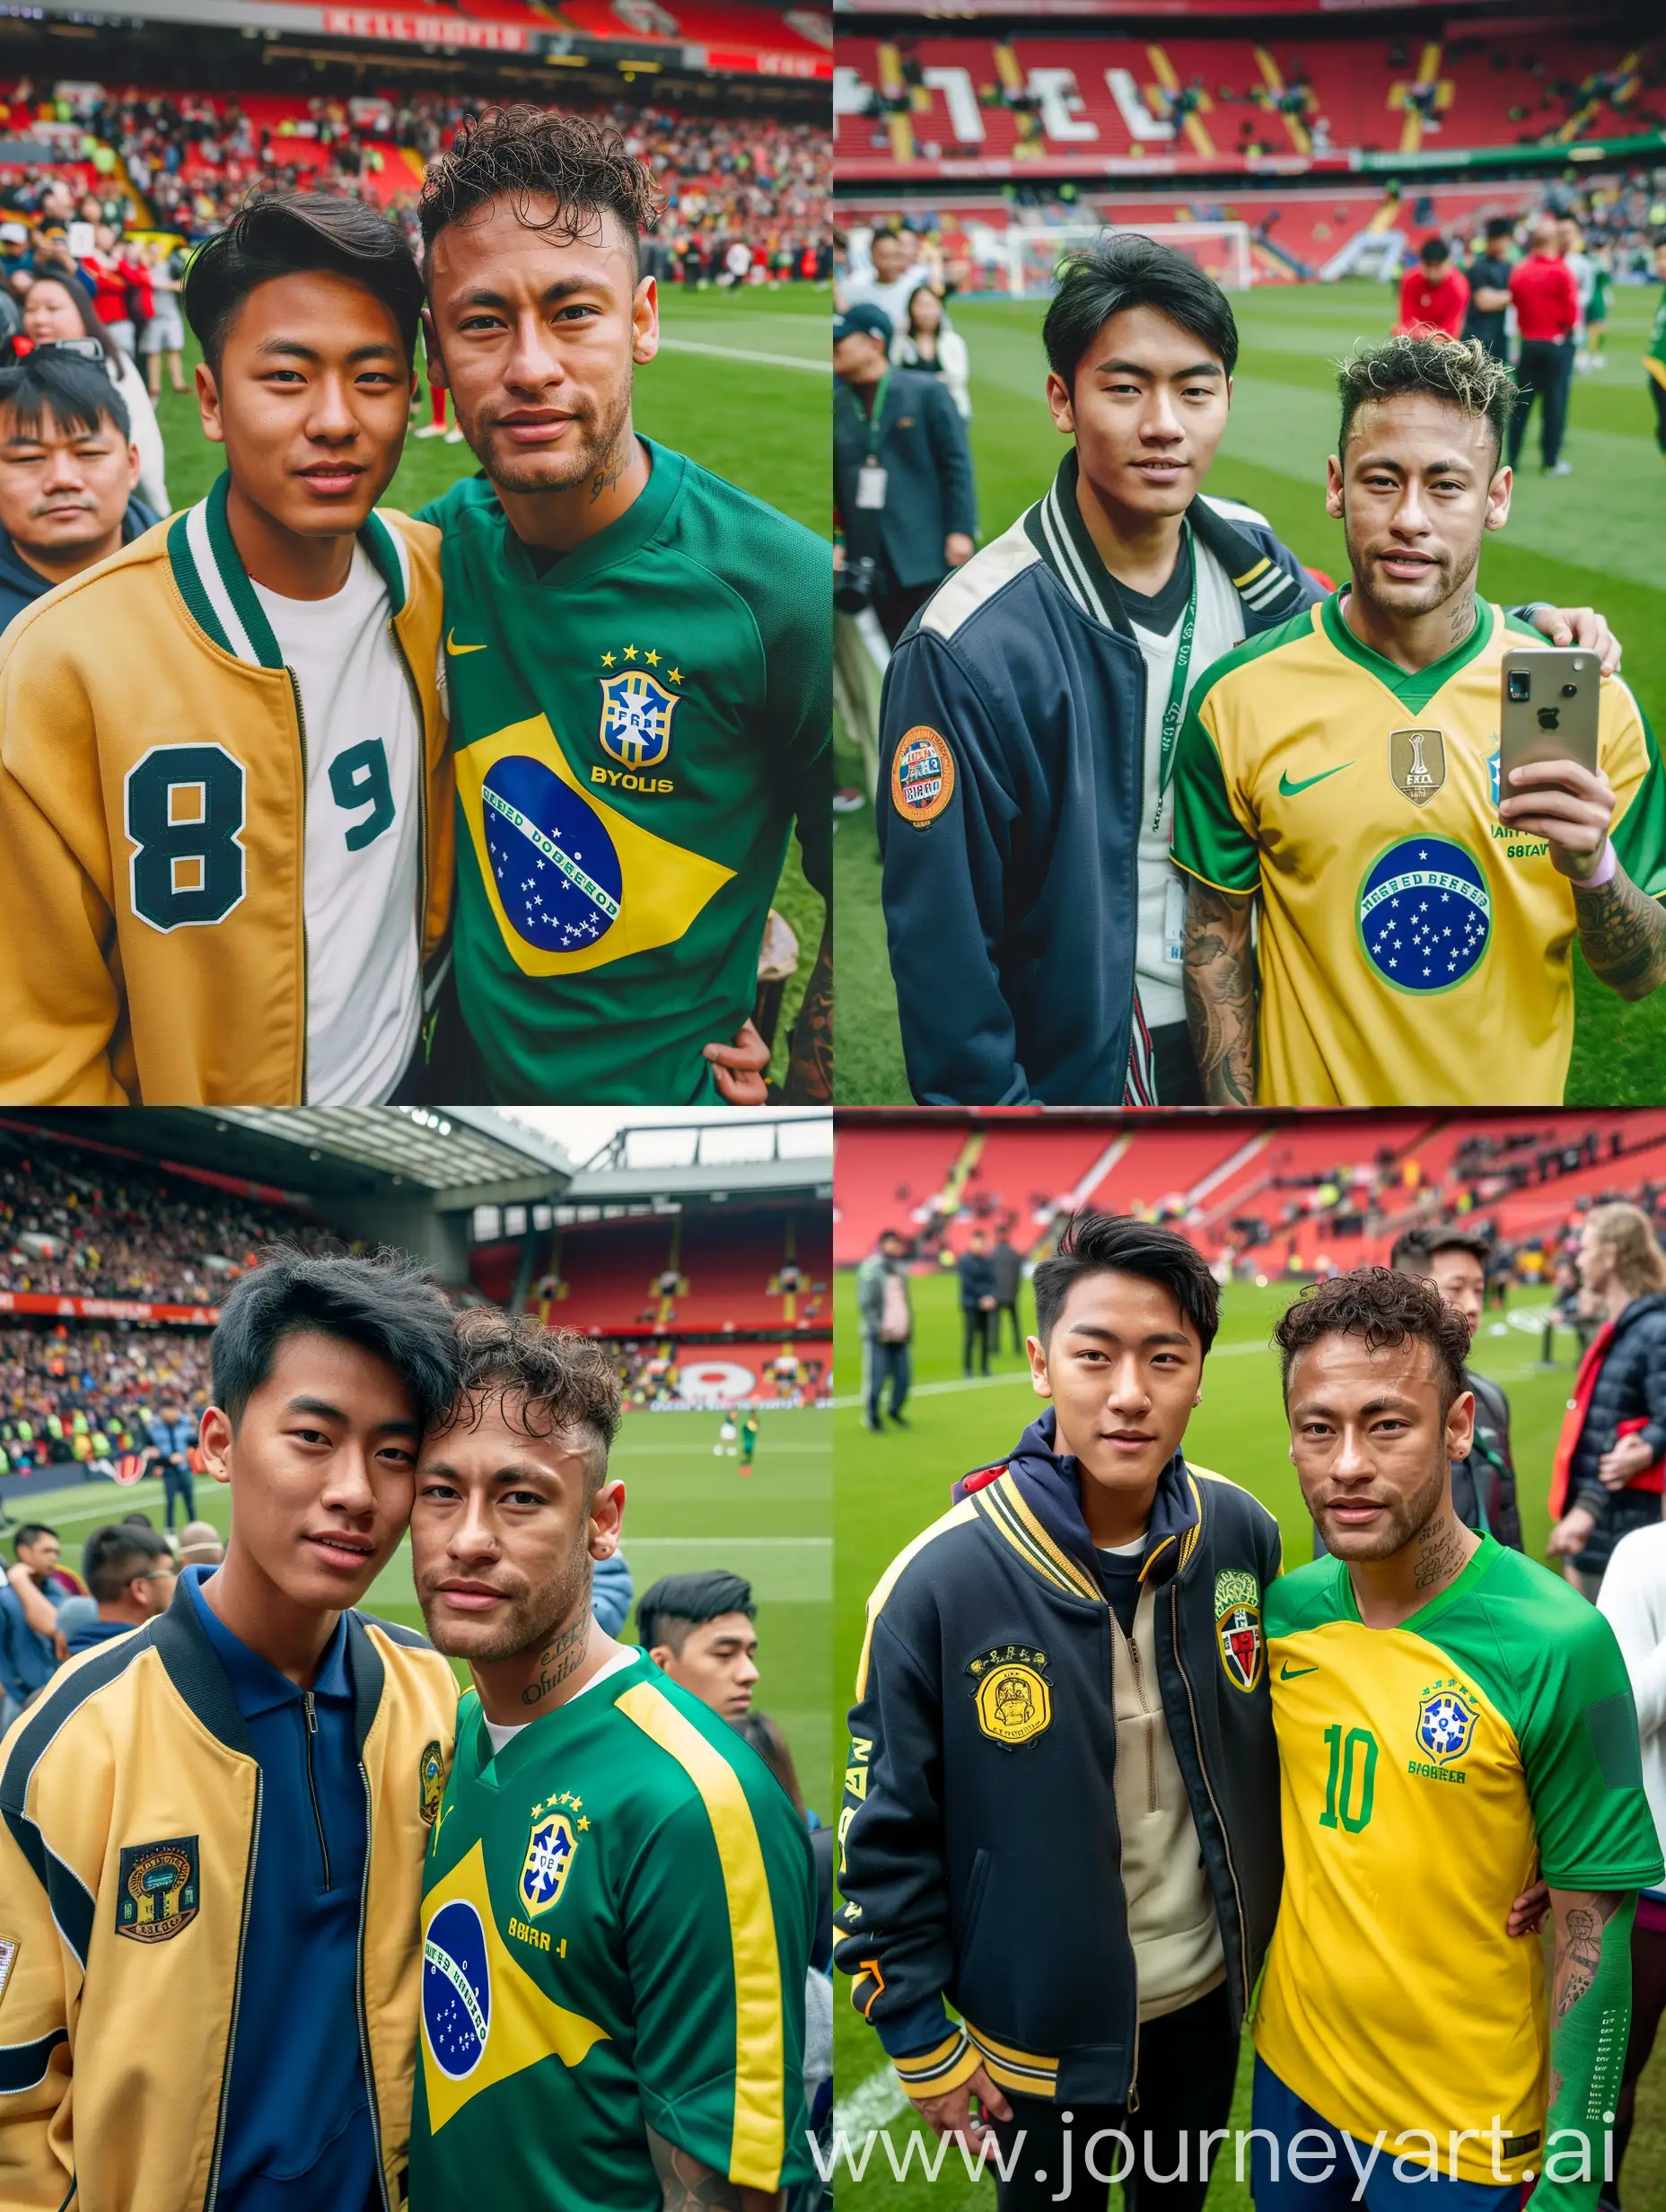 16YearOld-Korean-Man-Takes-Photo-with-Neymar-Jr-at-Old-Trafford-Stadium